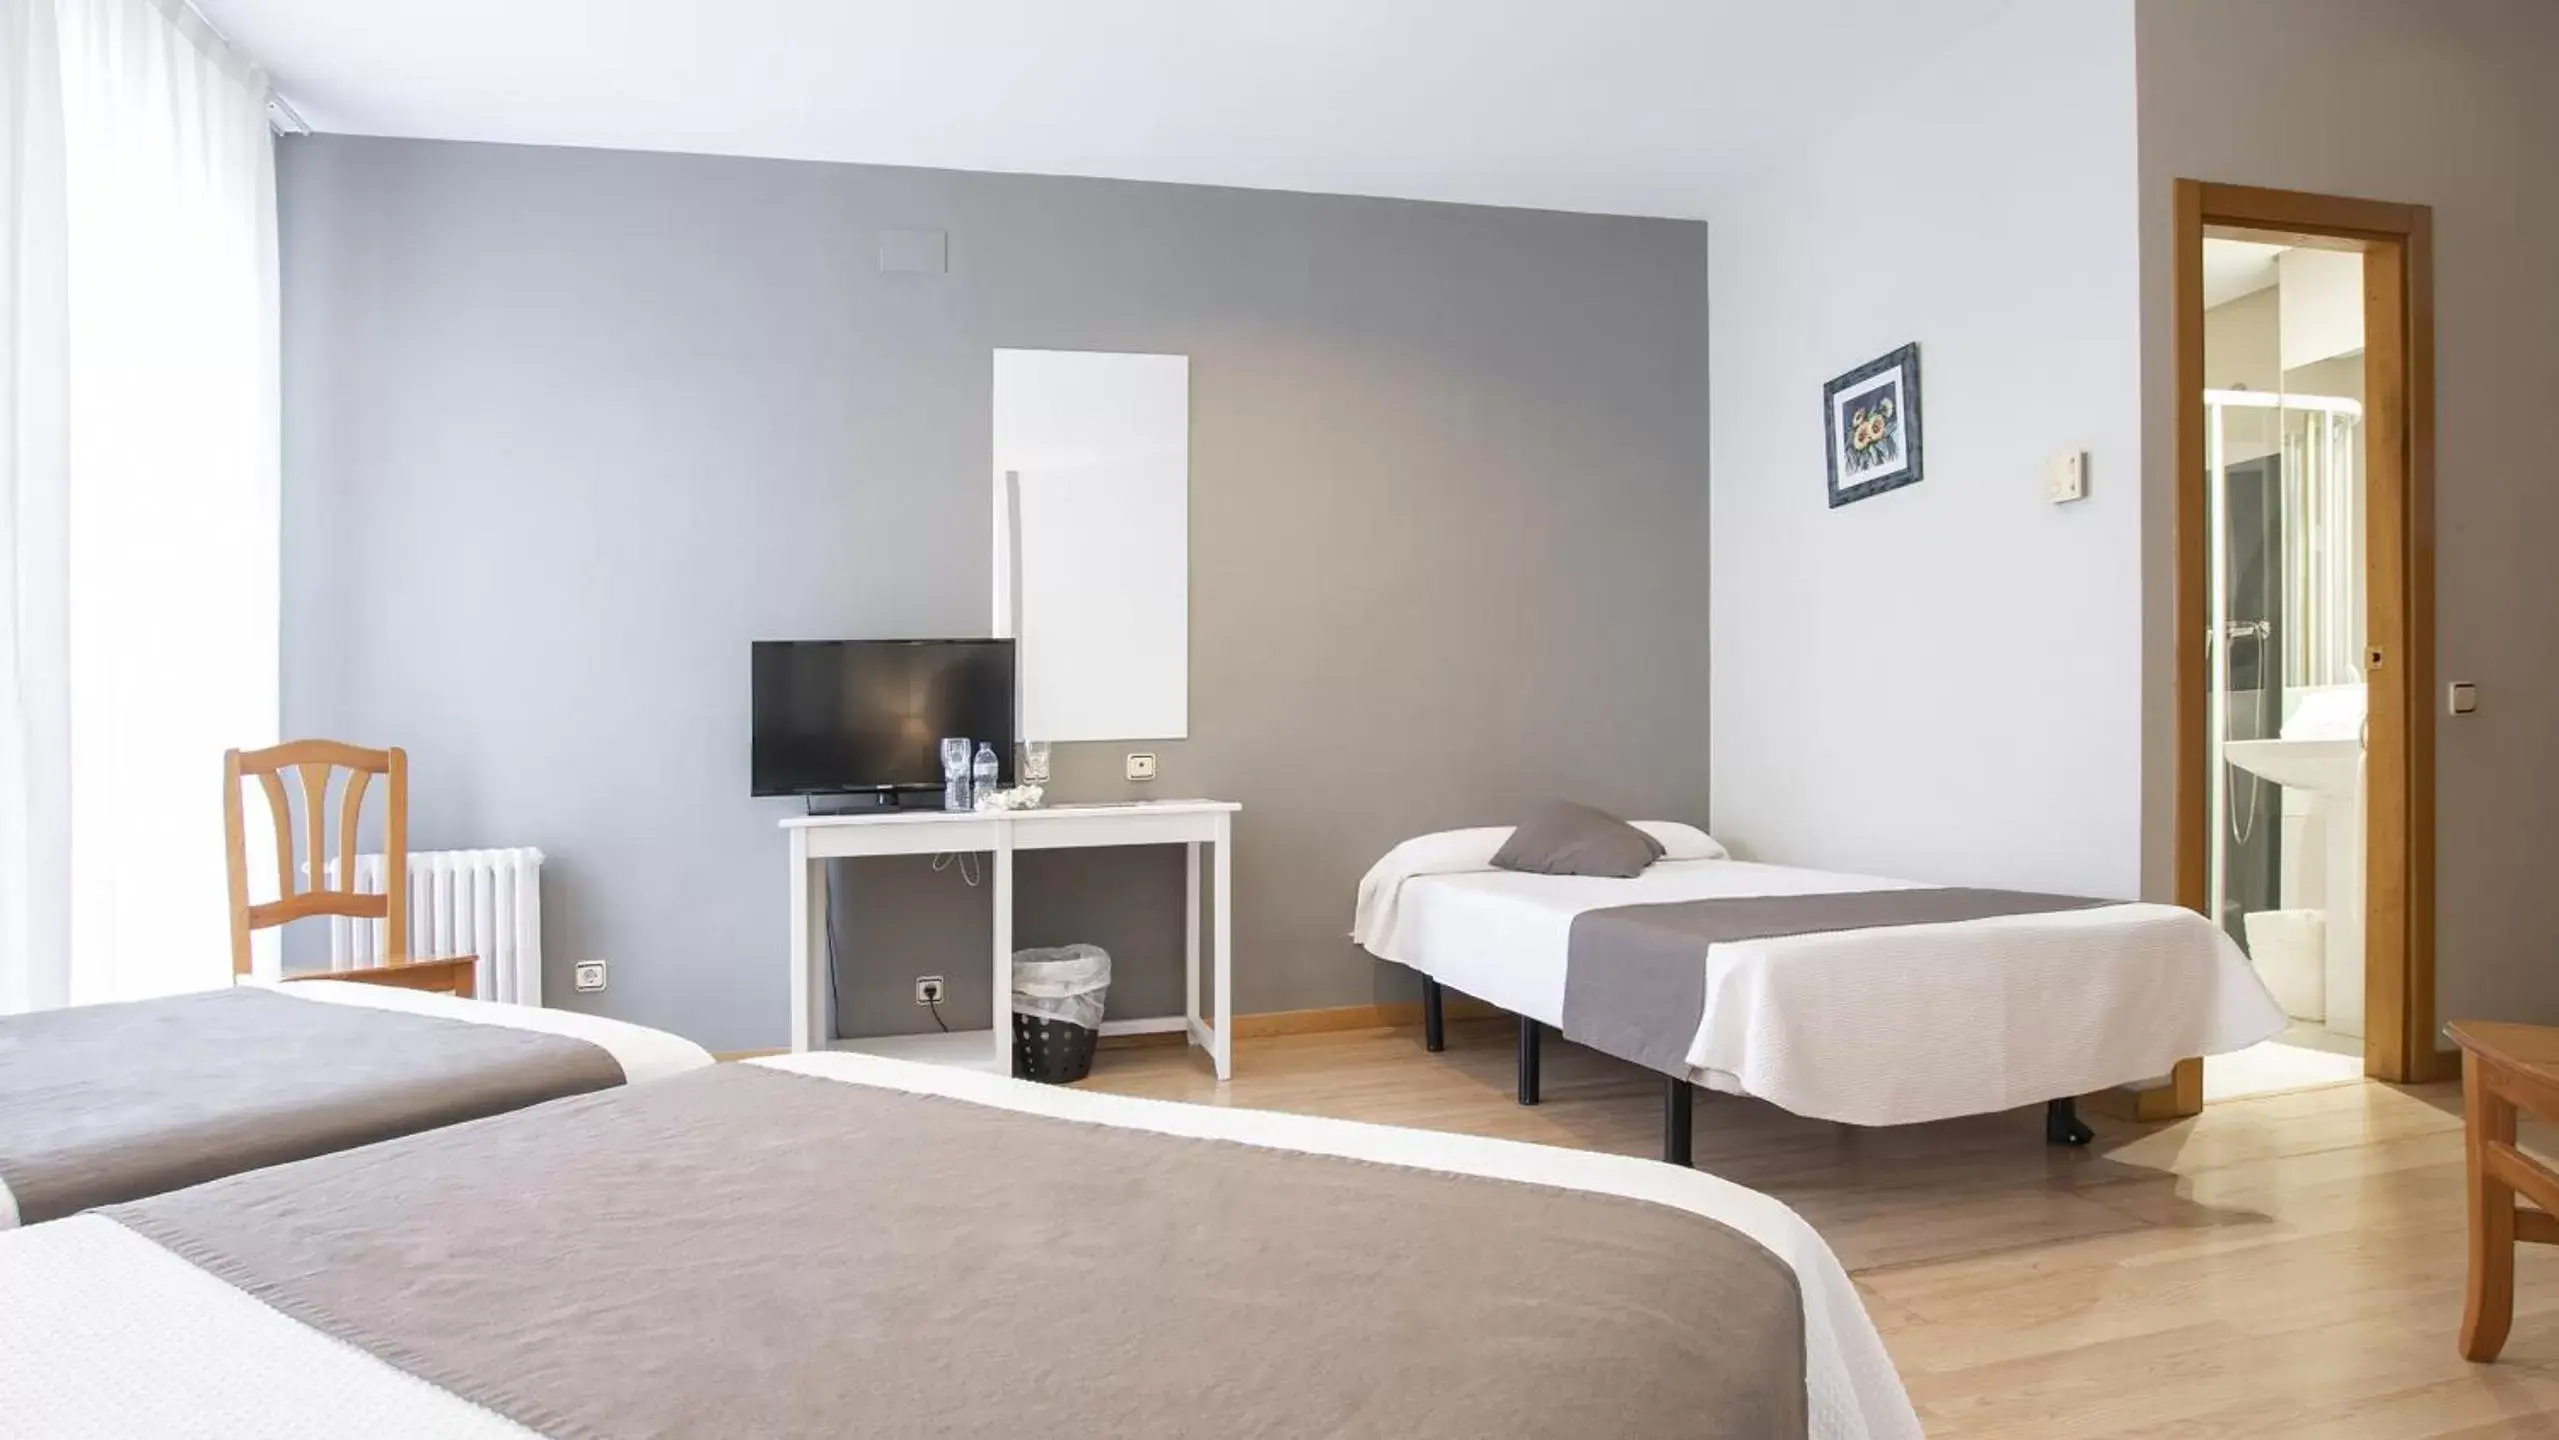 Bed, Room Photo in Hotel Isabel de Segura